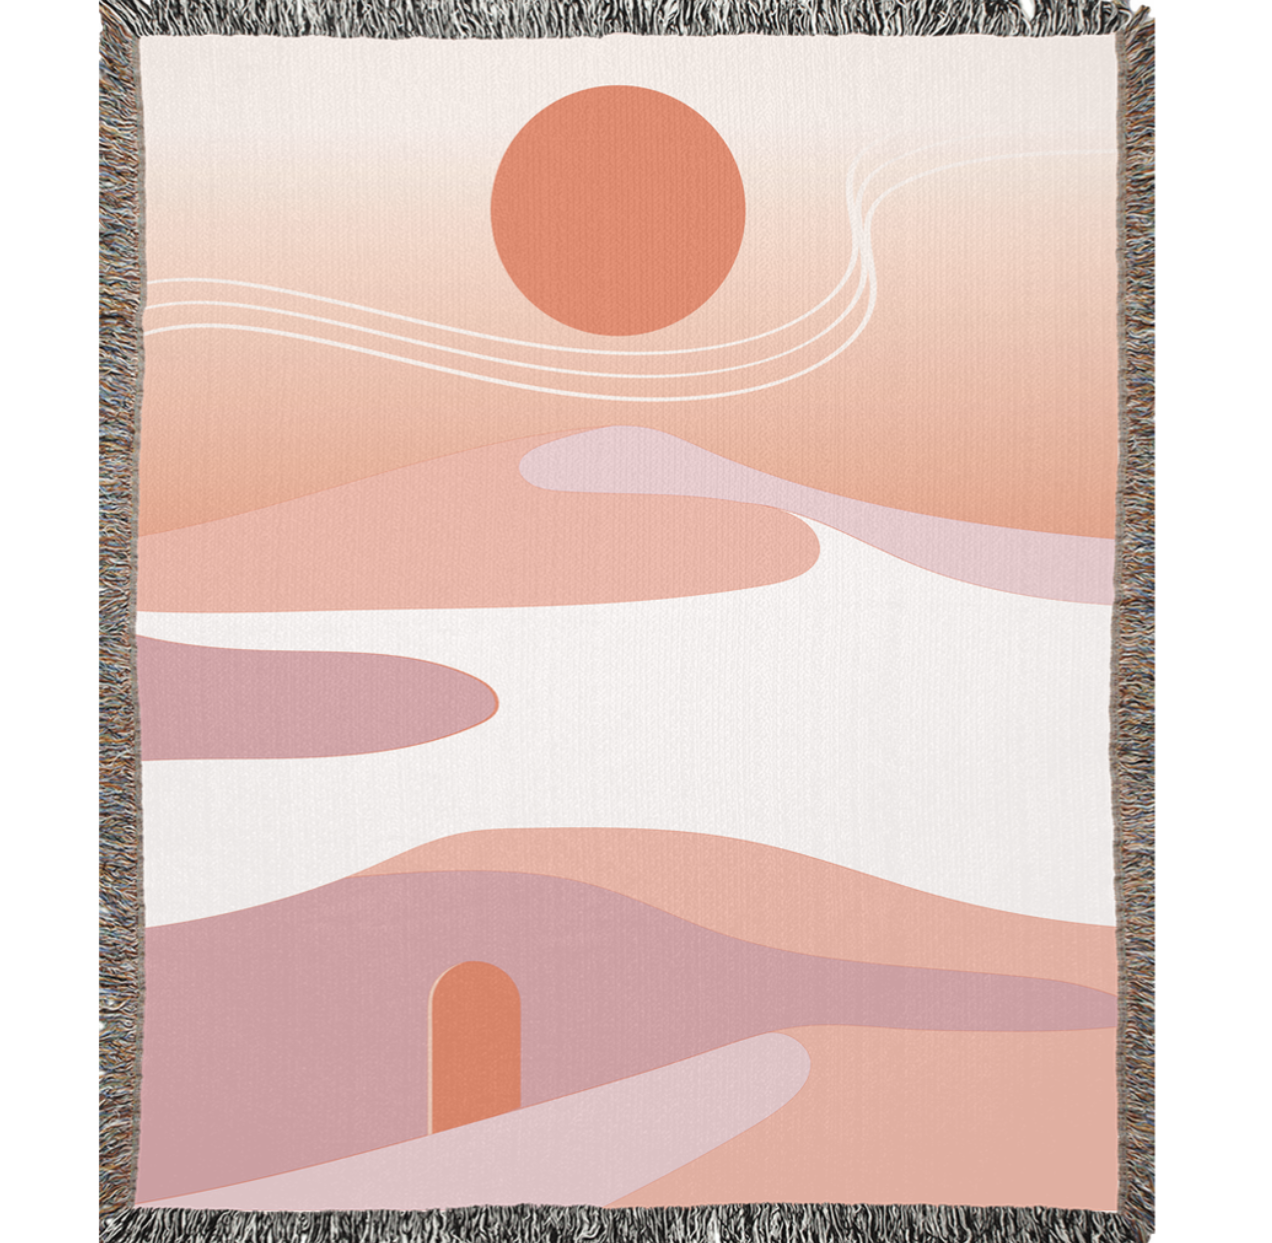 Buhlaixe Studio: Burnt Sun Blanket